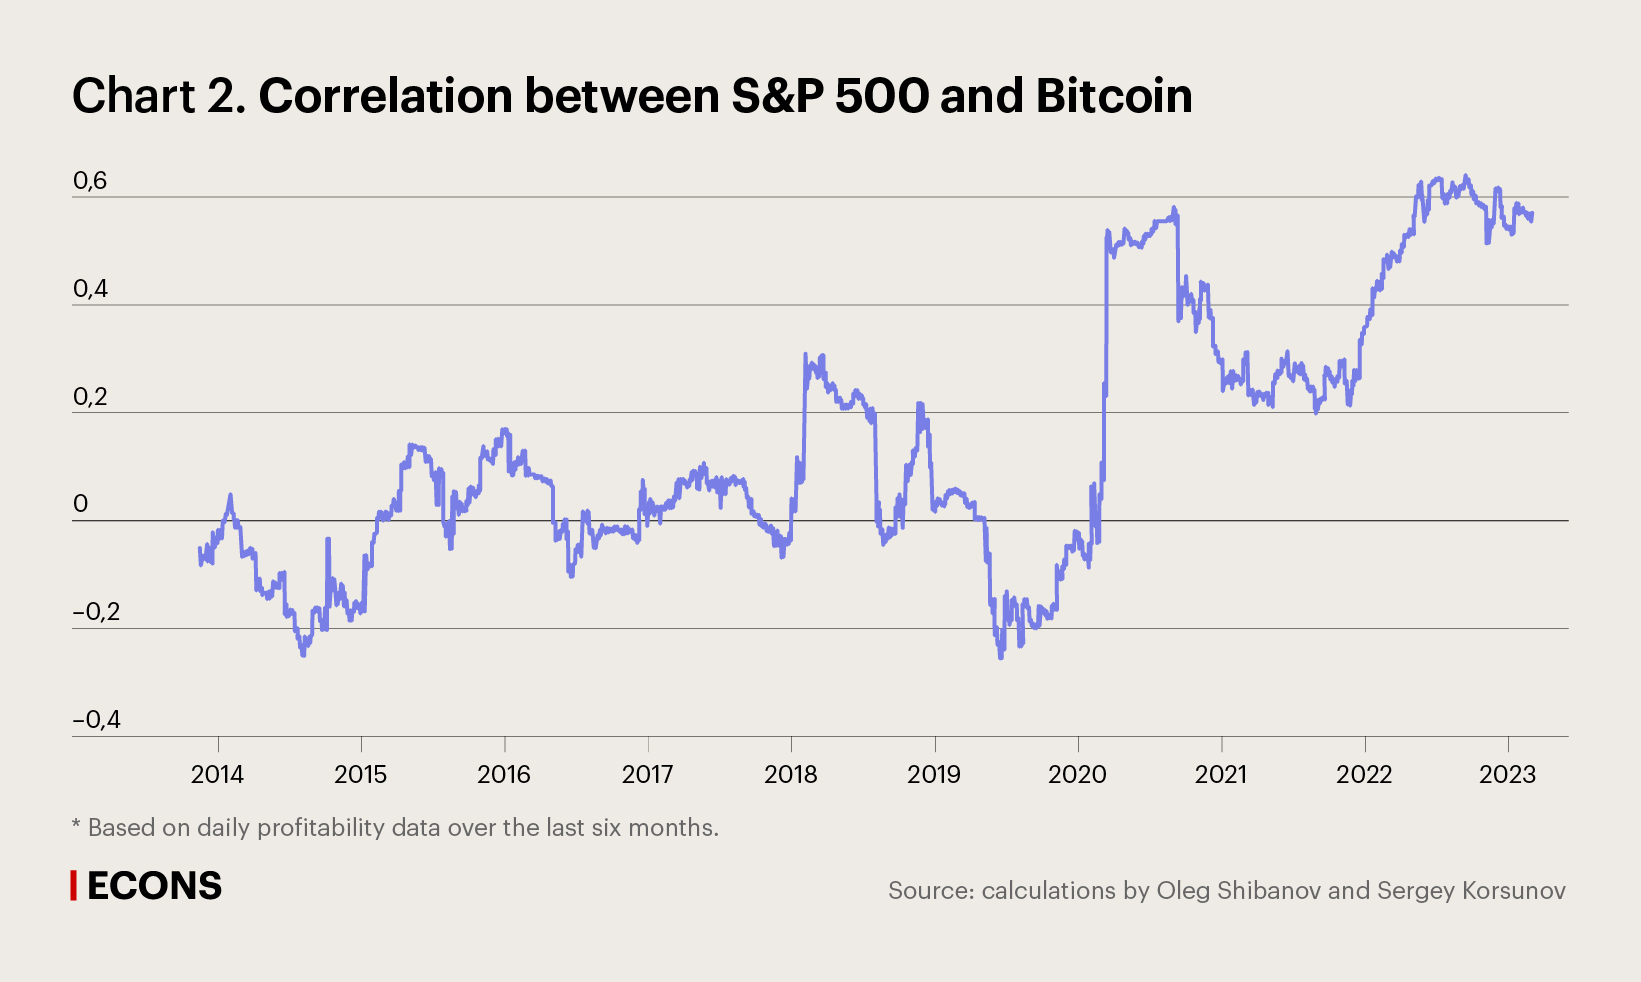 Correlation between S&P 500 and Bitcoin